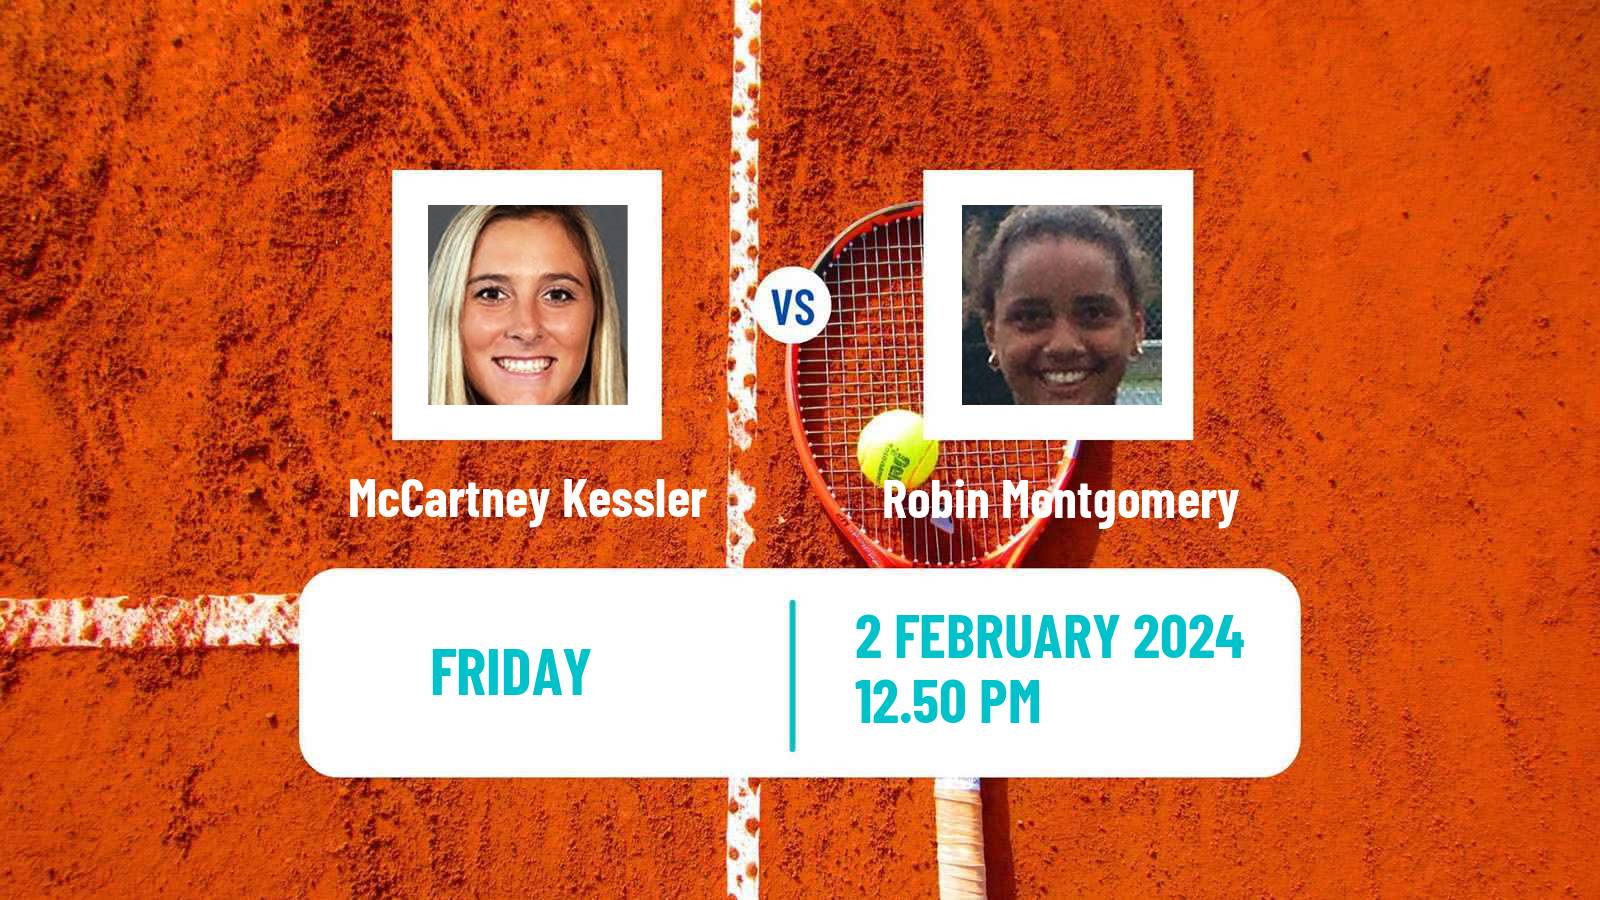 Tennis ITF W75 Rome Ga Women McCartney Kessler - Robin Montgomery